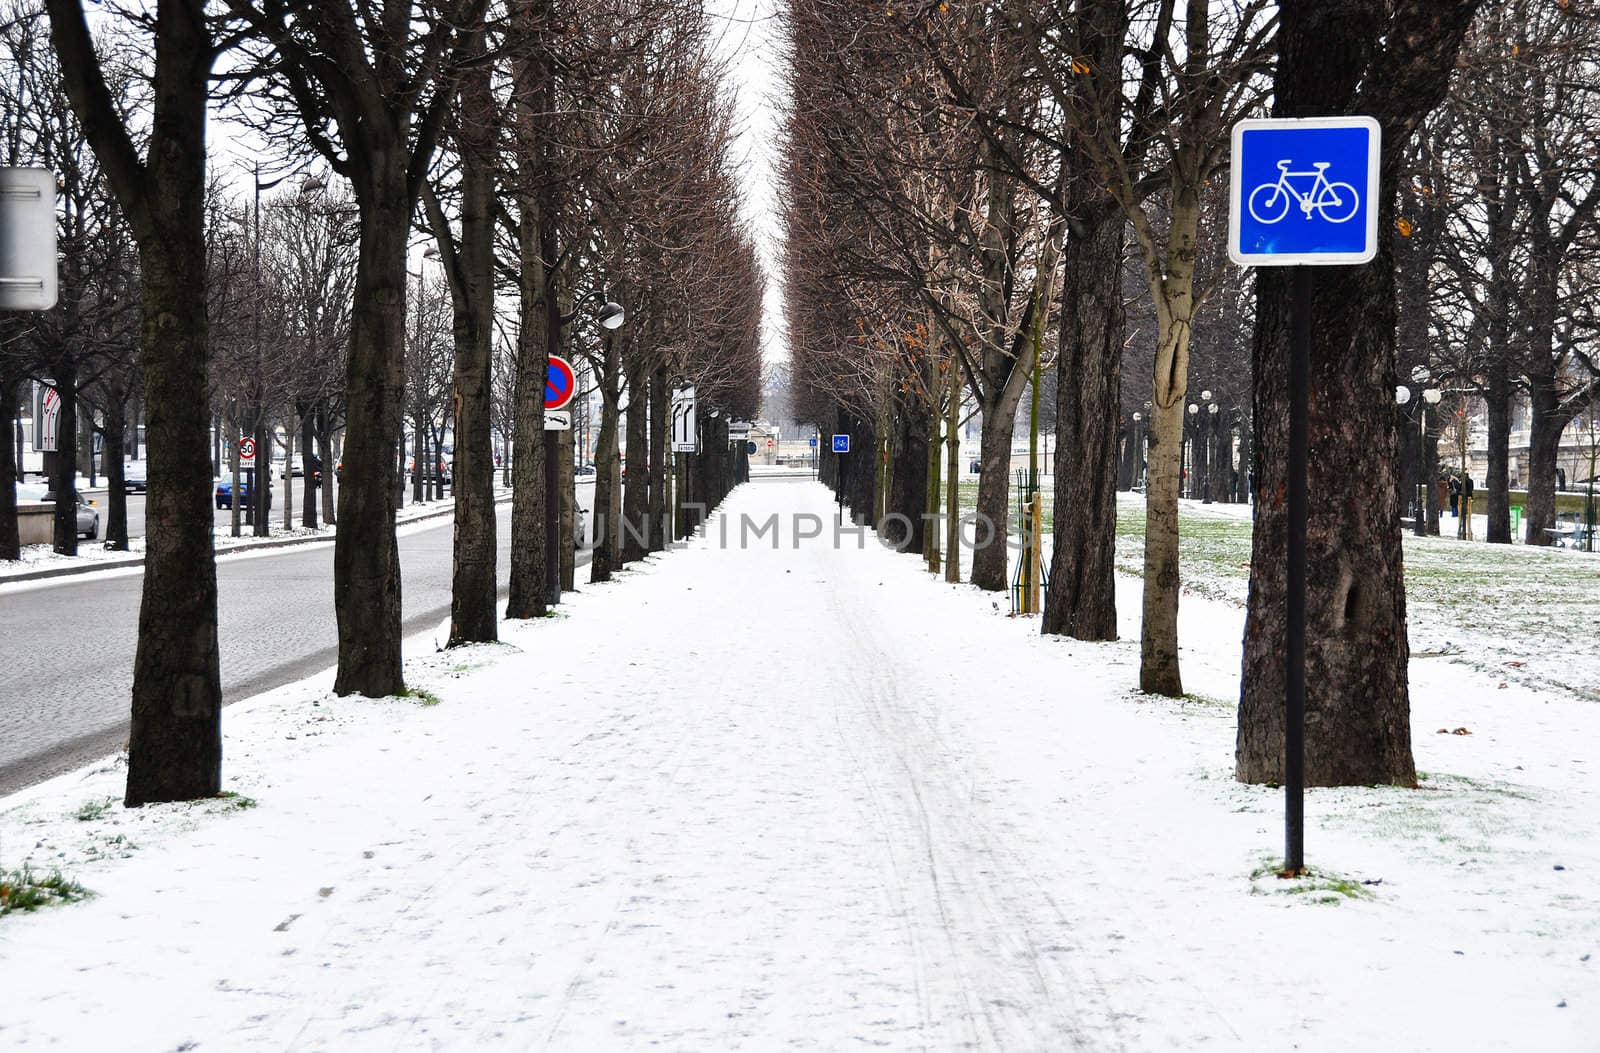 Bicycle lane in winter by dutourdumonde